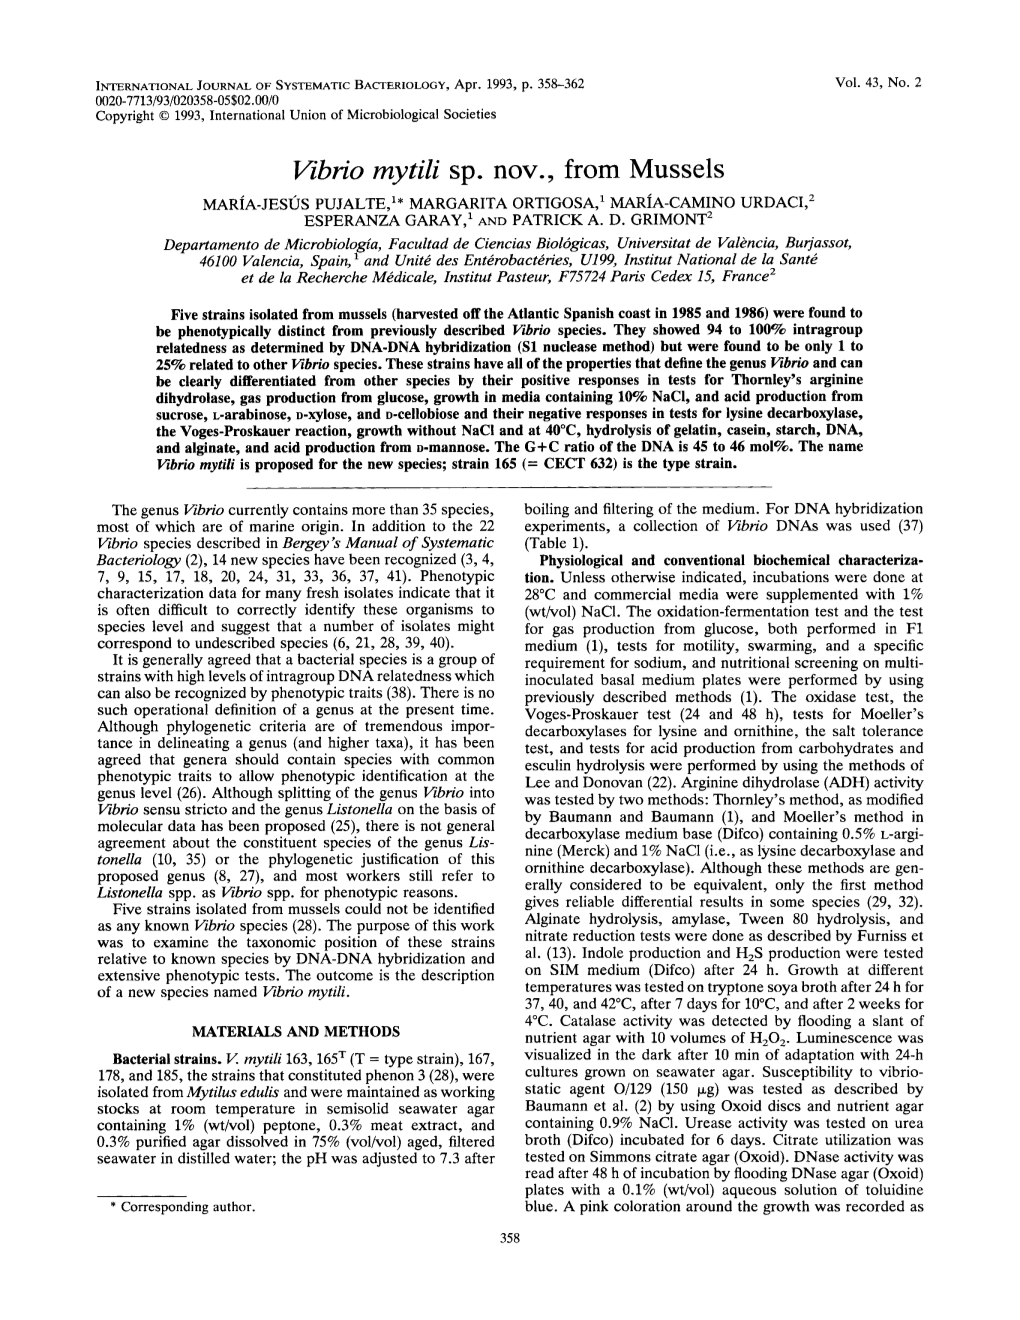 Vibrio Mytili Sp. Nov., from Mussels MAR~A-JESUS PUJALTE,'" MARGARITA ORTIGOSA,~MARIA-CAMINO URDACI,~ ESPERANZA GARAY,L and PATRICK A